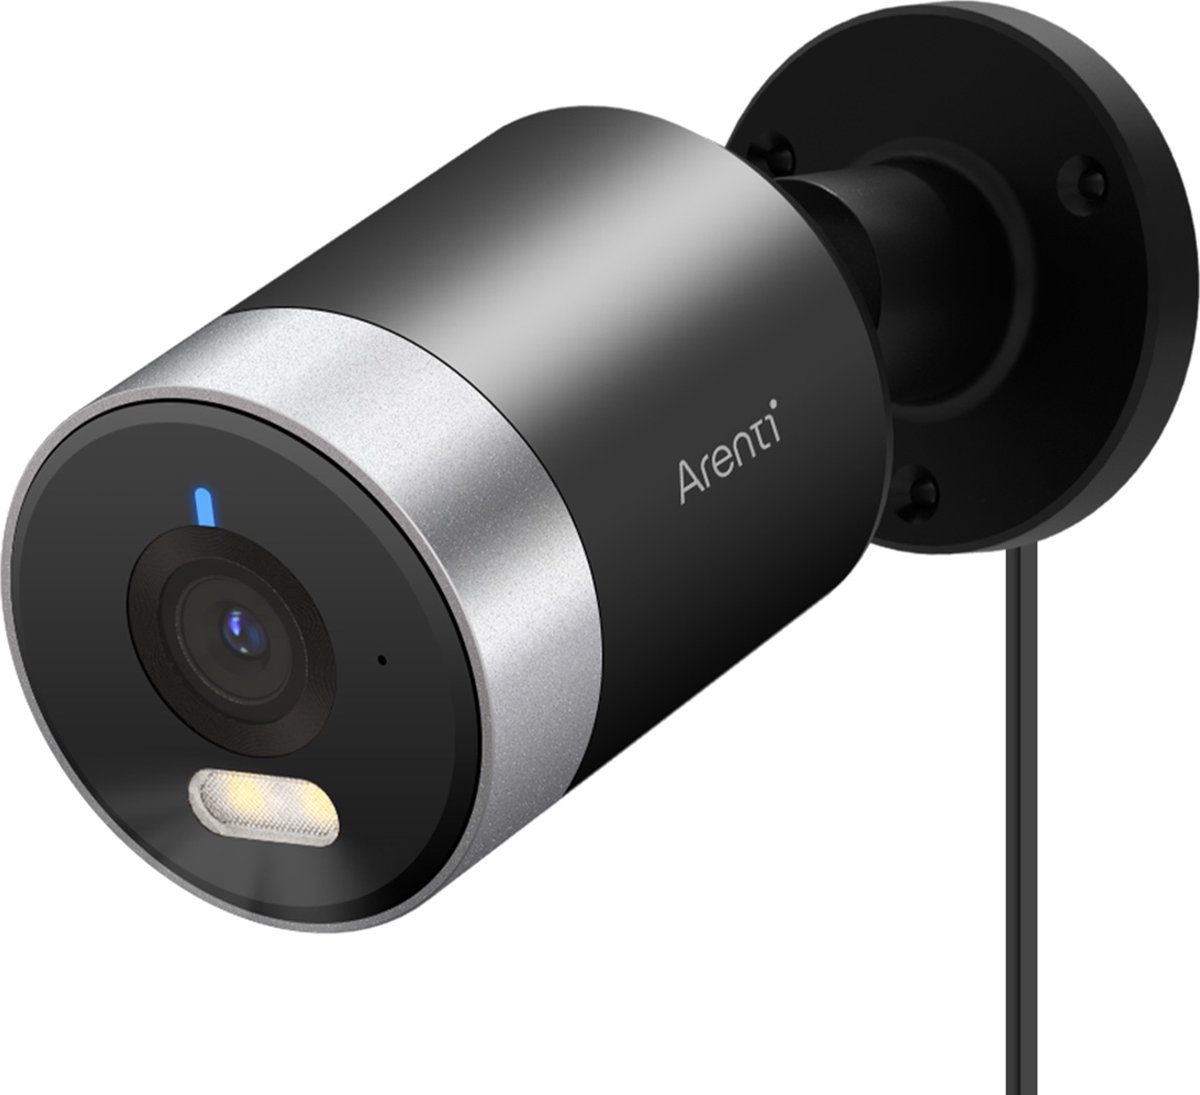 Arenti Outdoor1 Bewakingscamera - Beveiligingscamera buiten - 2K UHD Resolutie - Wifi camera - Inclusief 32GB SD kaart